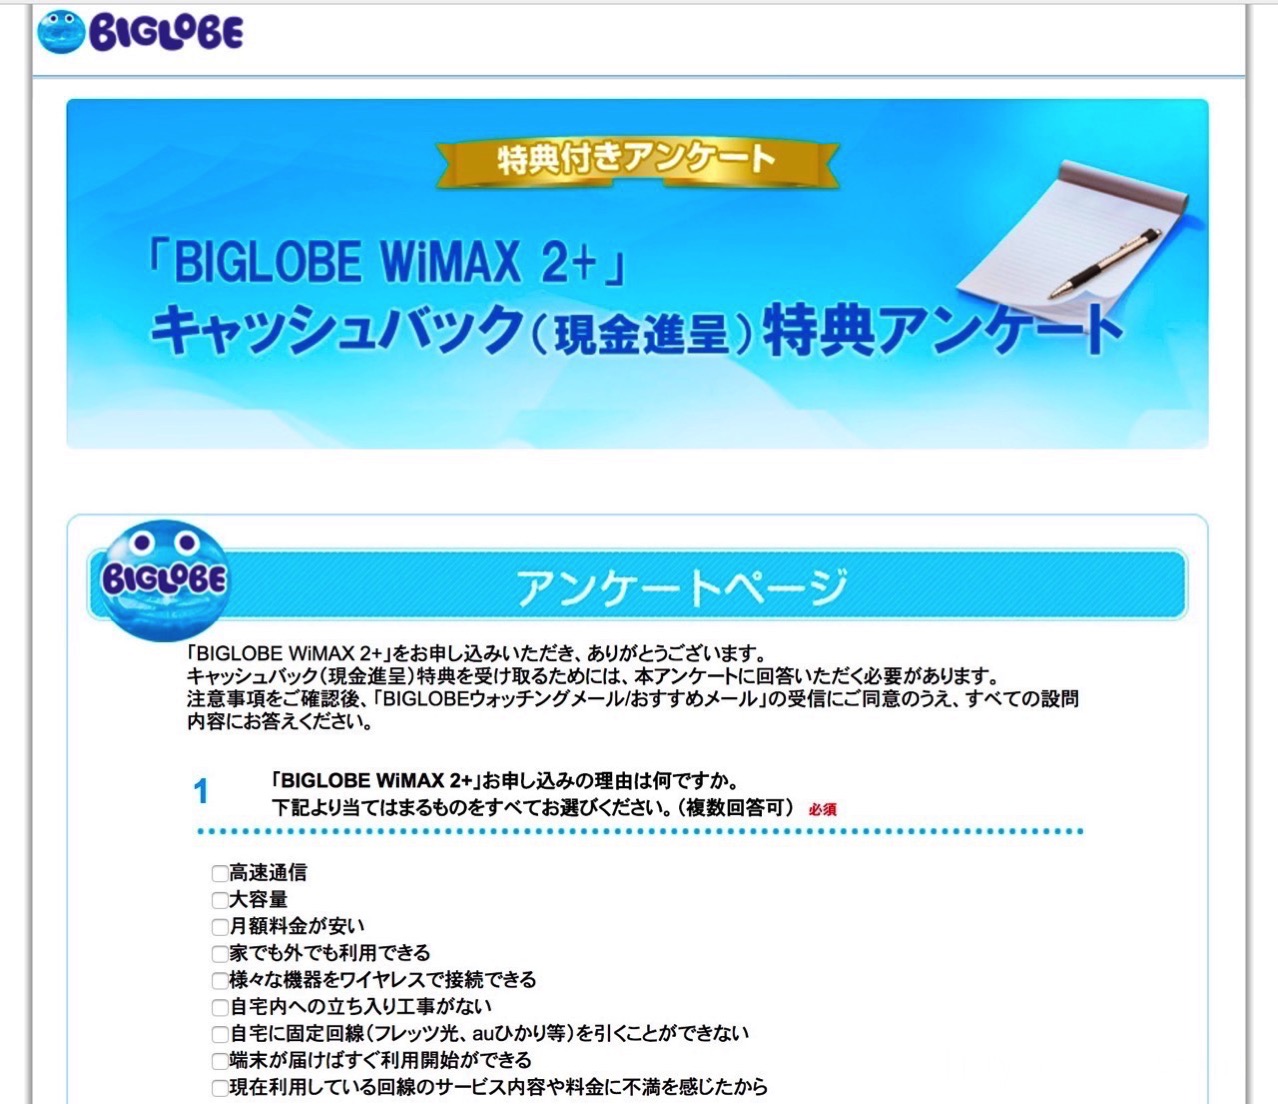 170410 biglobe wimax 9